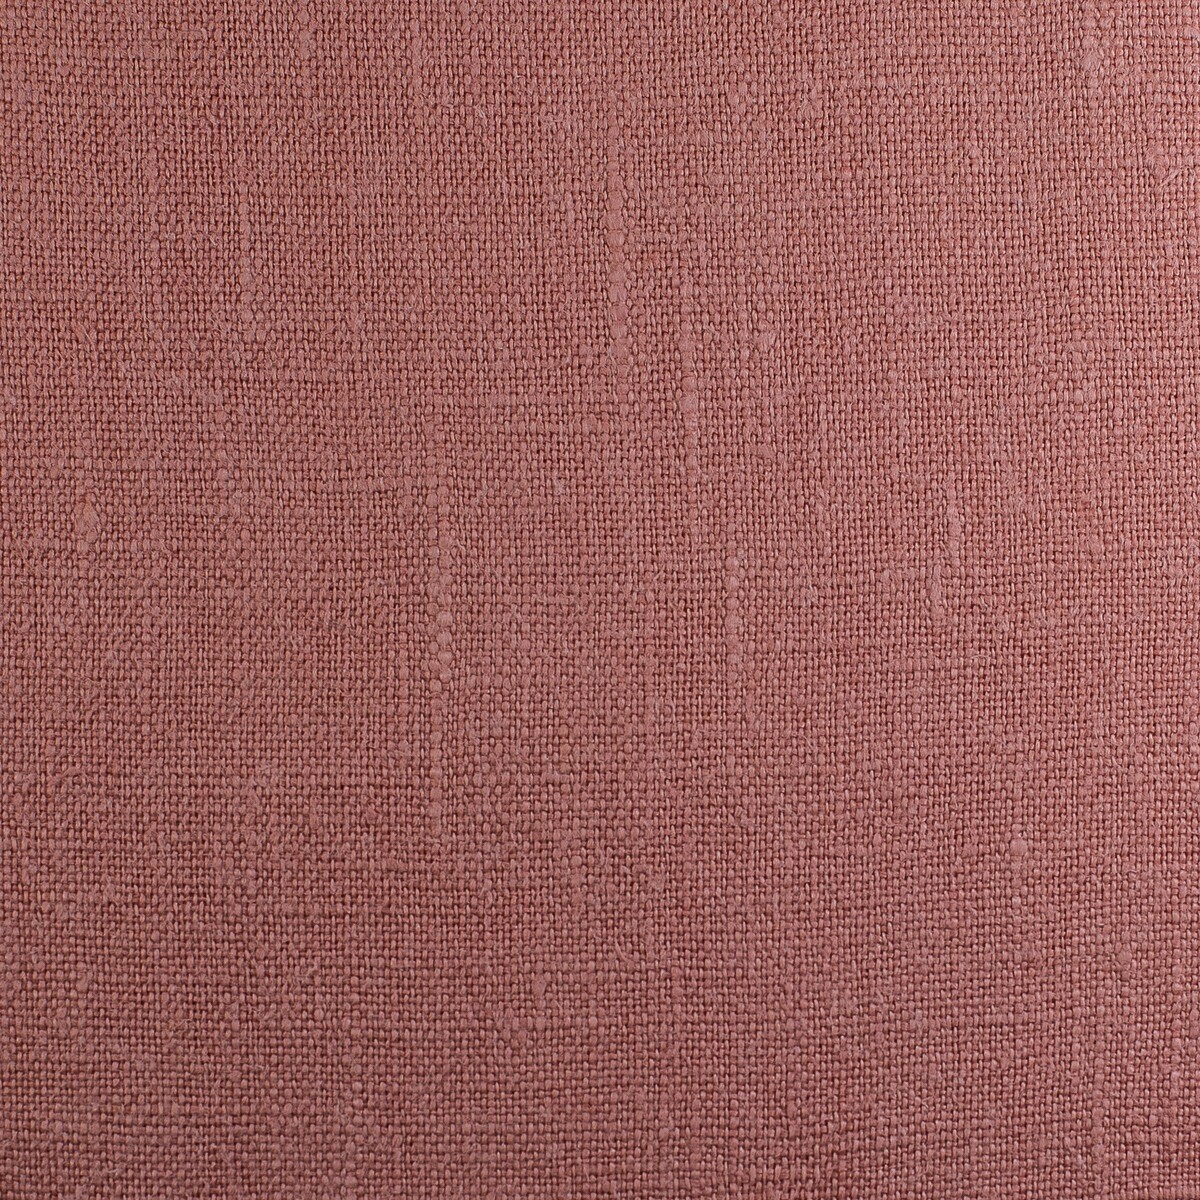 Copper 100% Linen